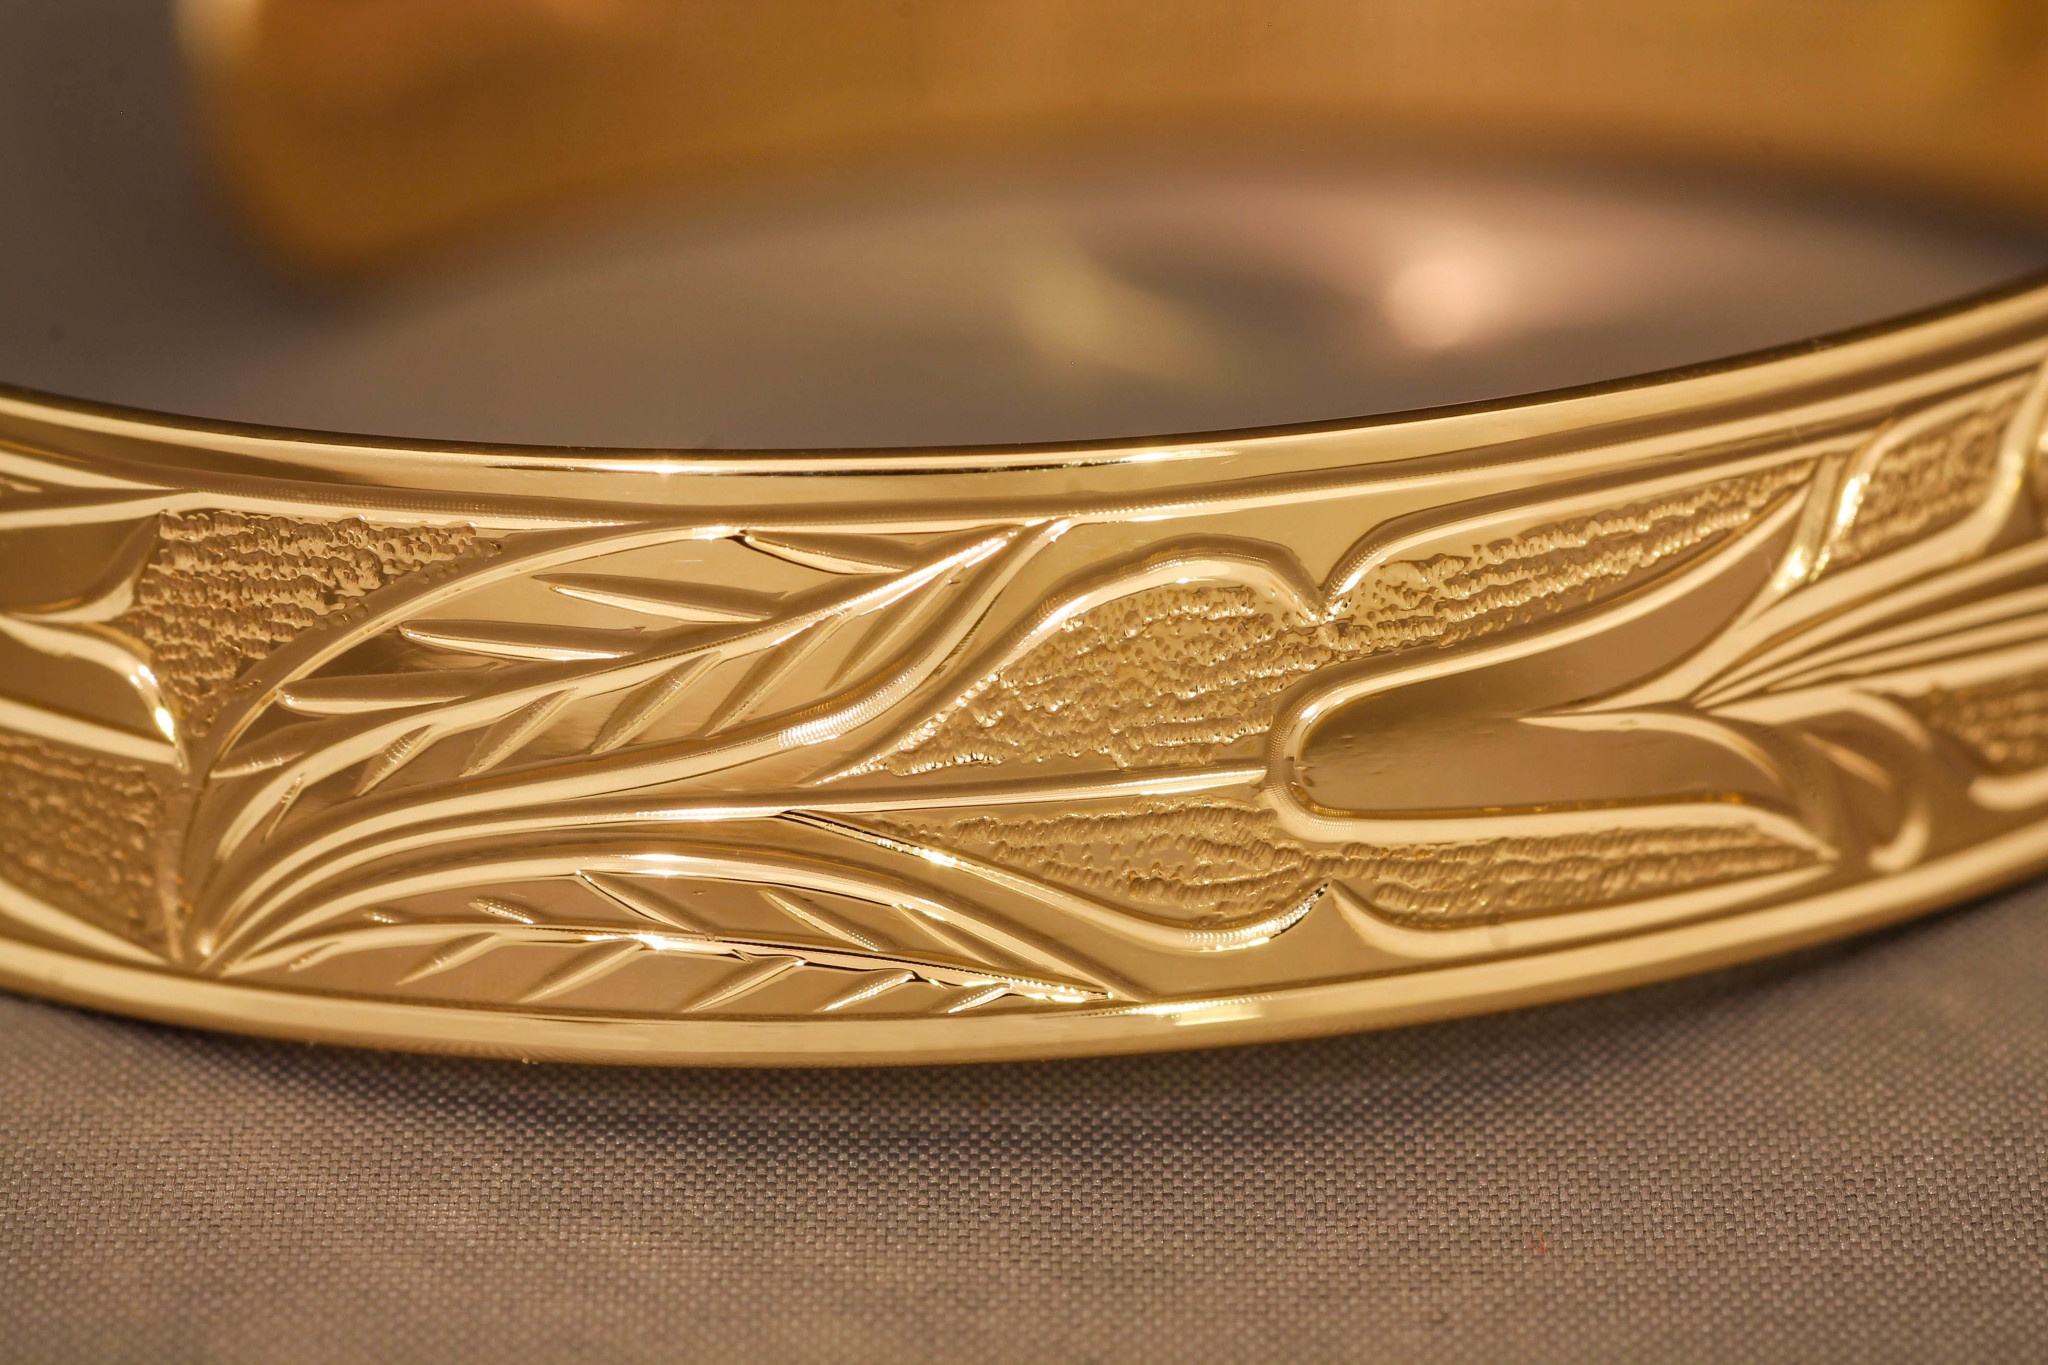 Gold 1/4" Hummingbird Bracelet